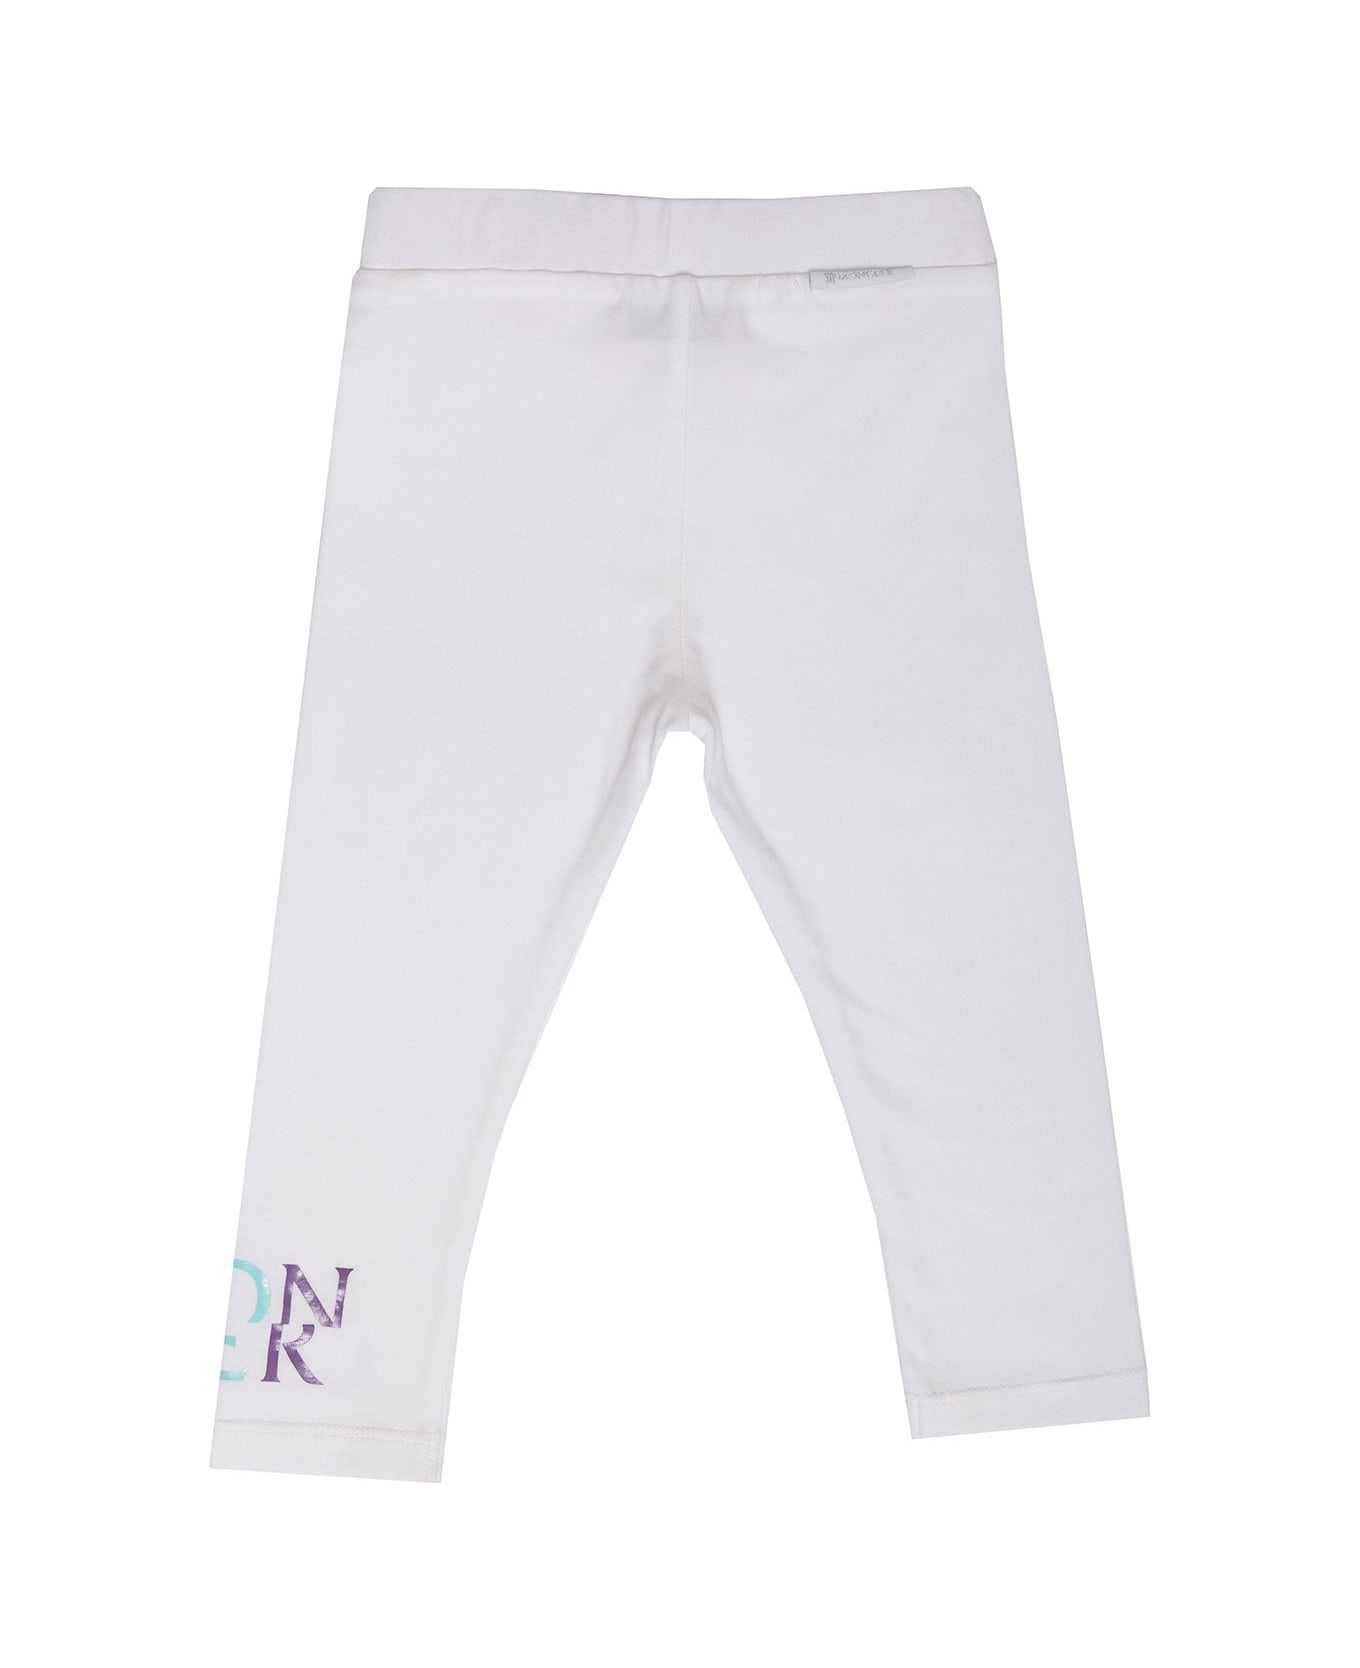 Moncler Kids Baby Girl's White Cotton Leggings With  Logo Print - White